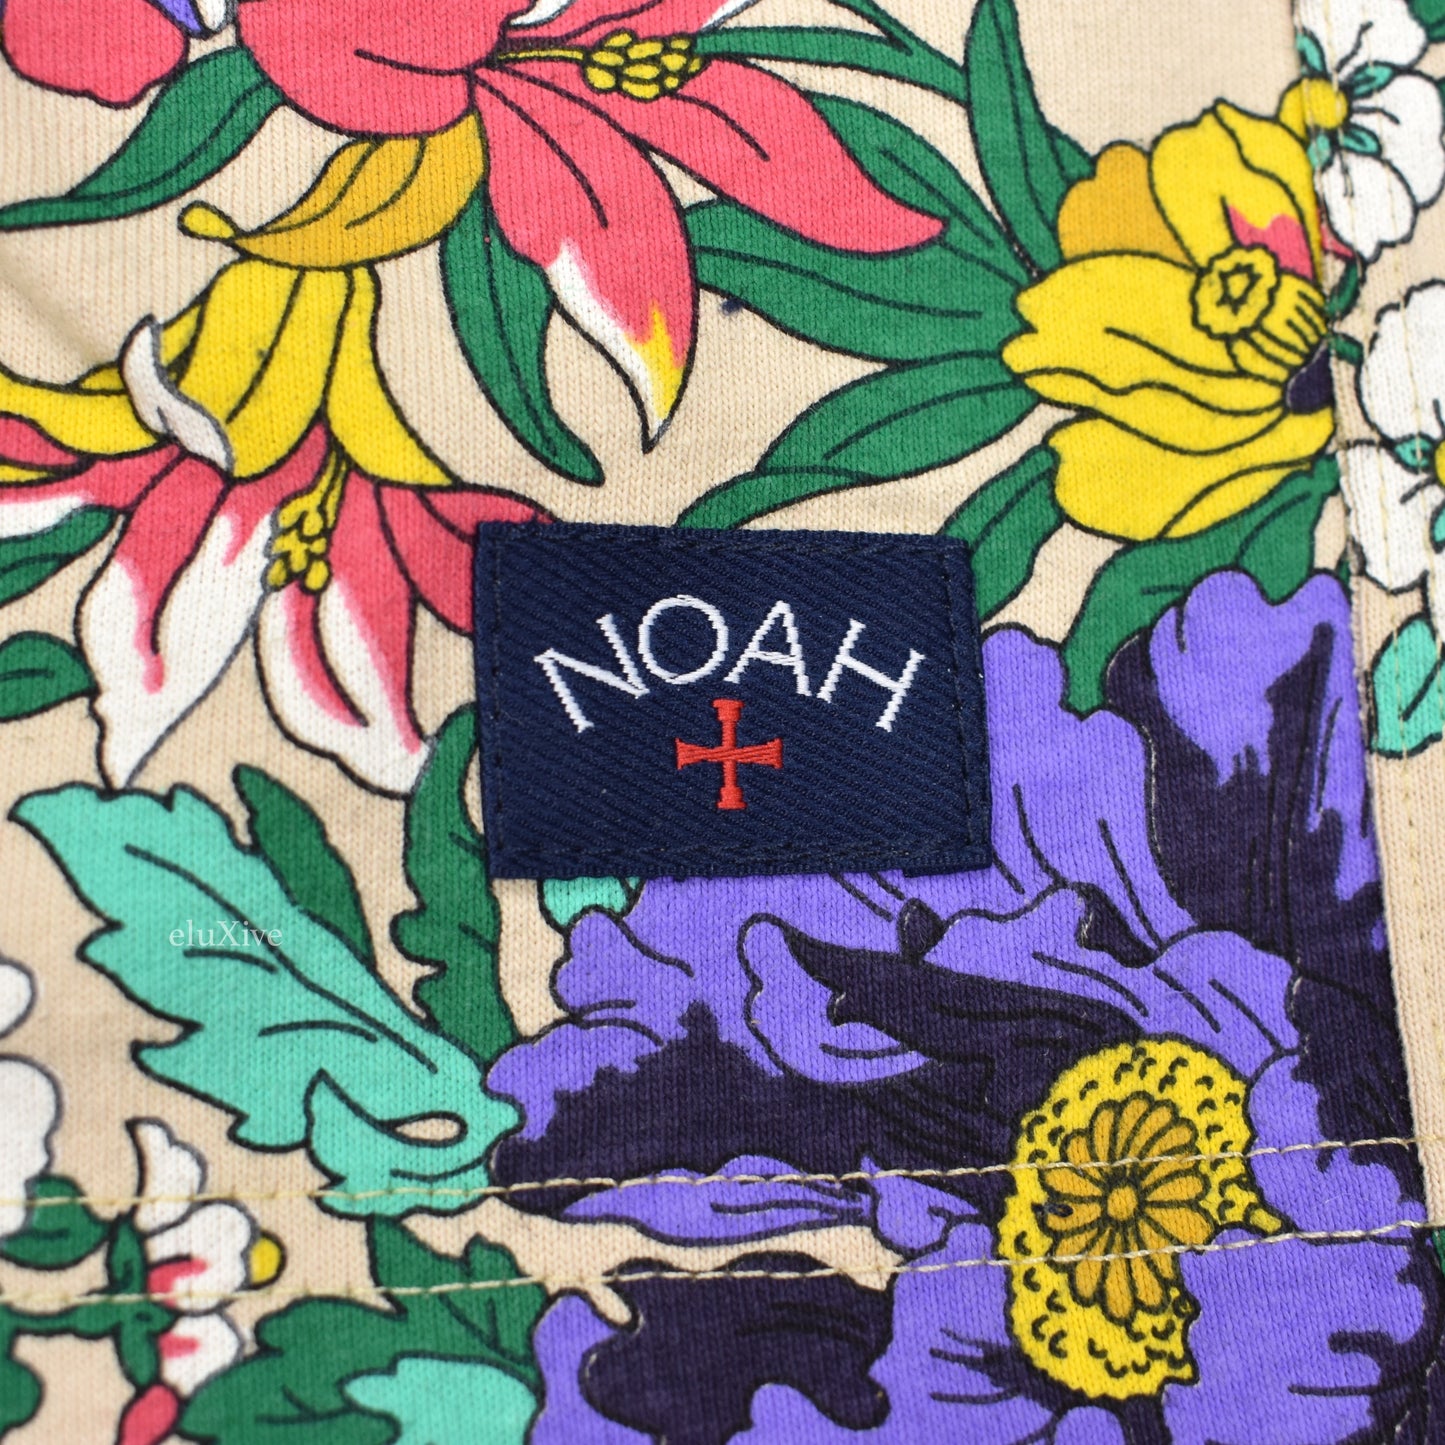 Noah - Floral Print Rugby Shorts (Beige)